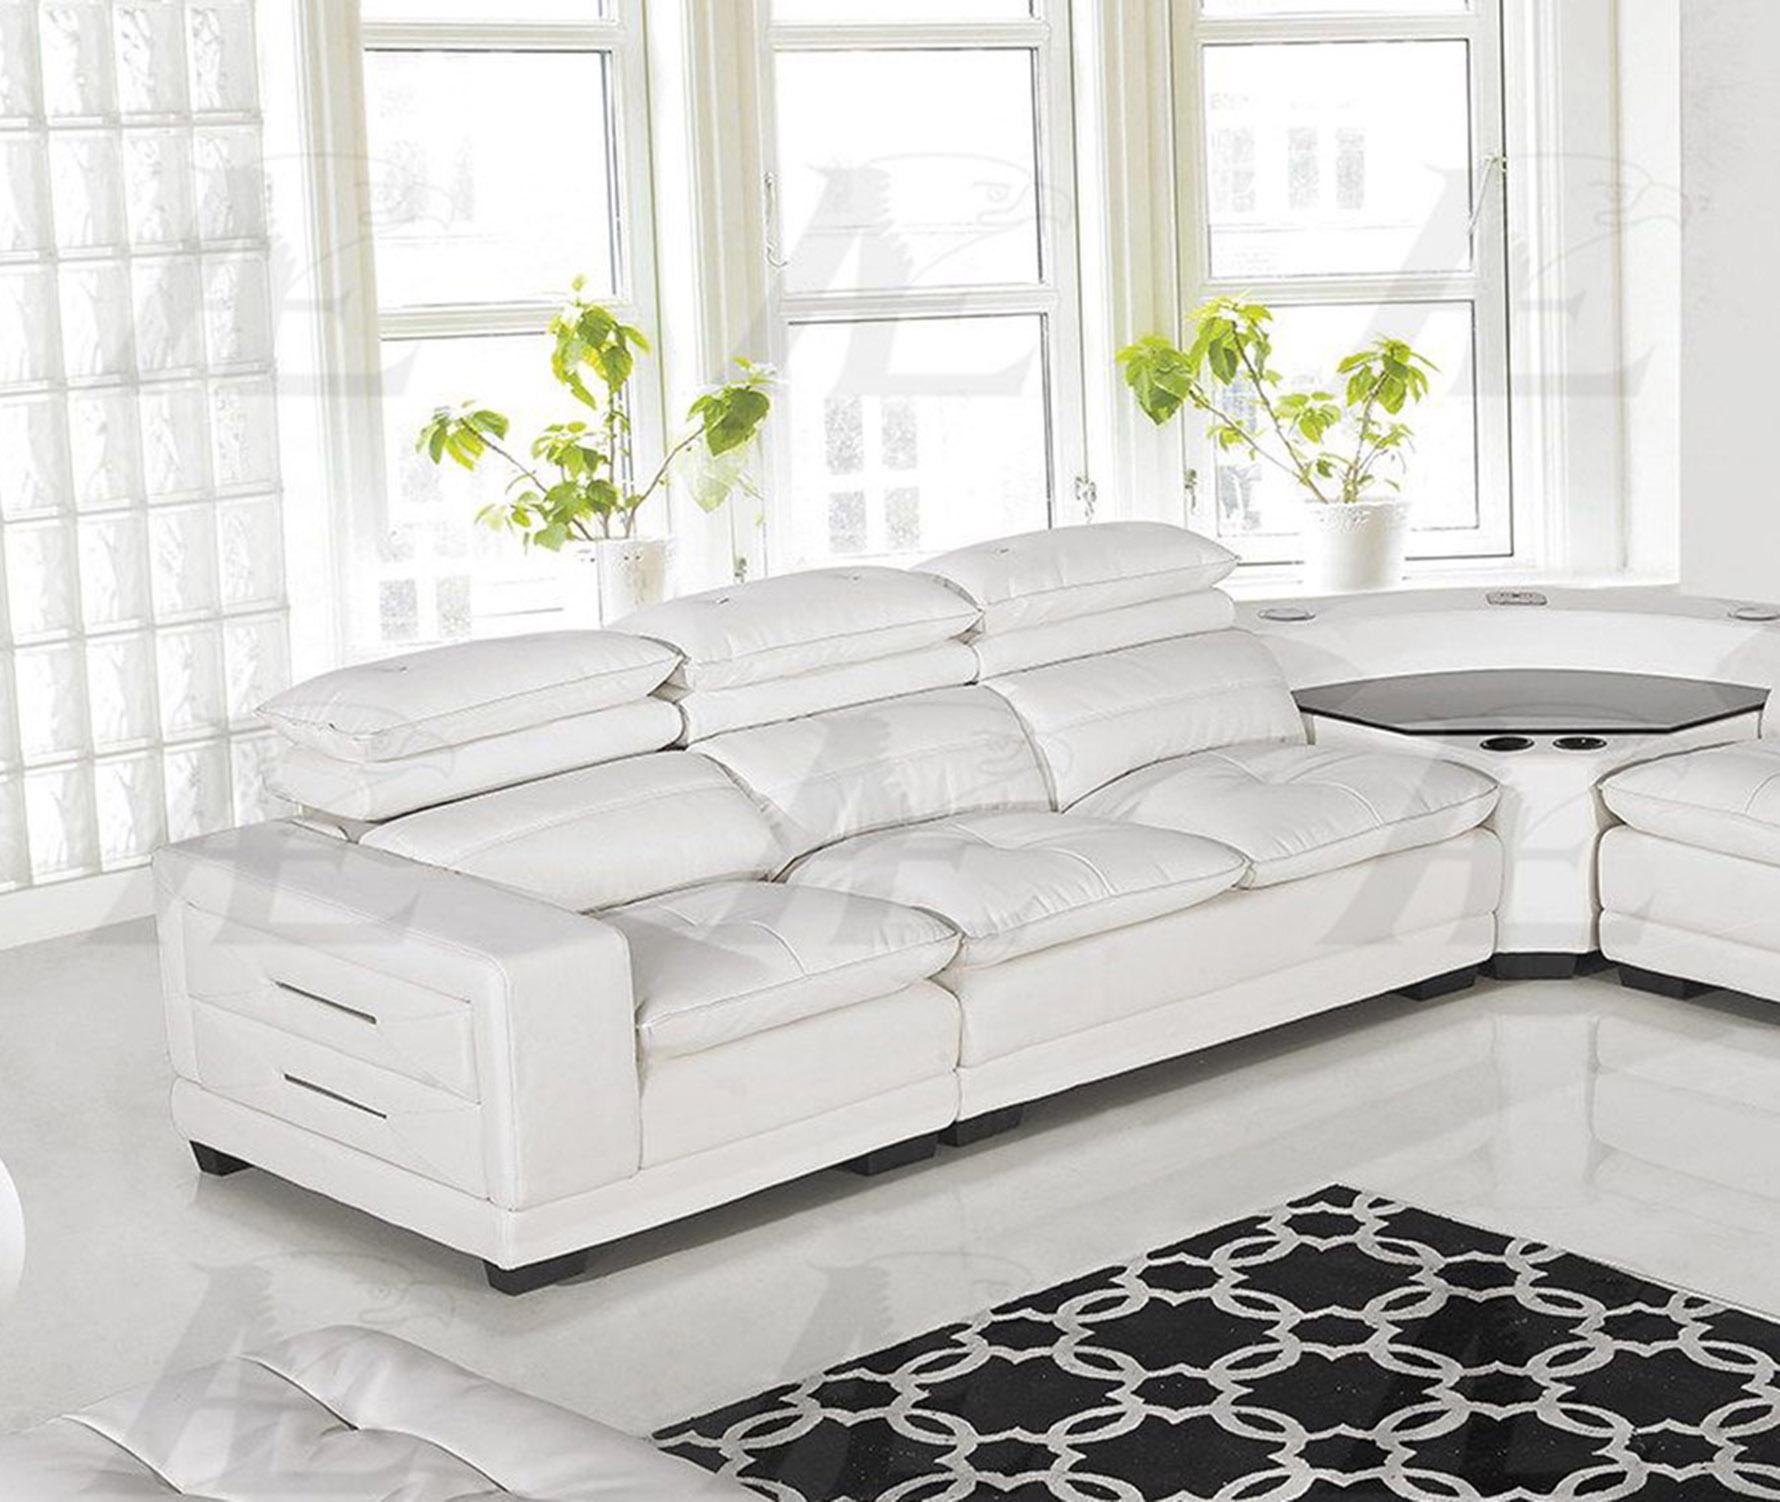 

    
American Eagle Furniture AE-L688M-W Sectional Sofa Set White AE-L688M-W Set-6
